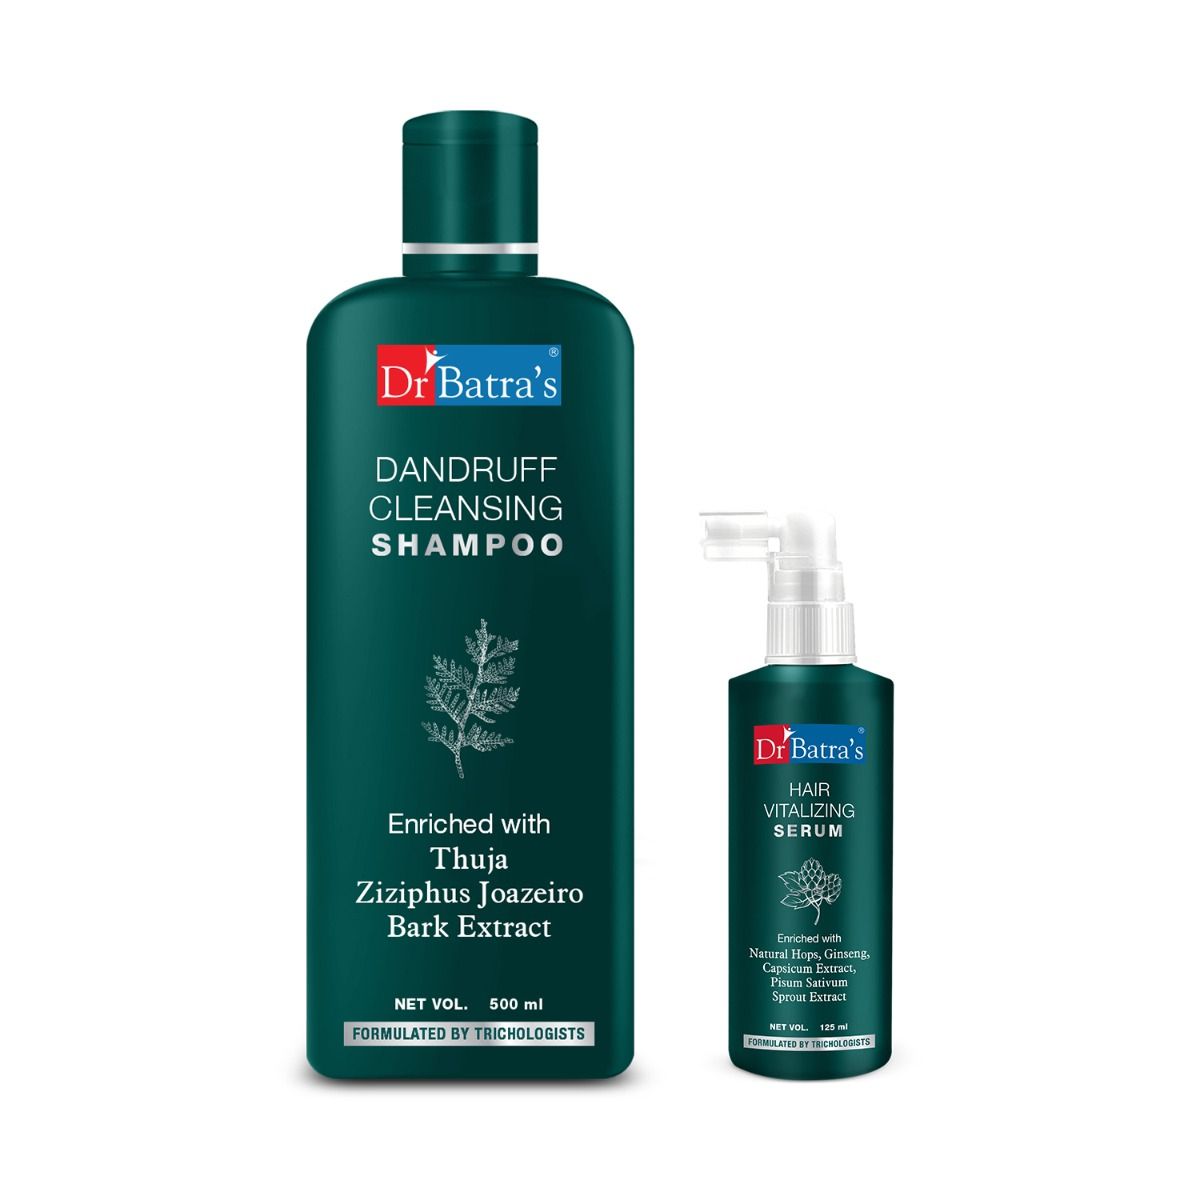     			Dr Batra's Hair Vitalizing Serum 125 ml and Dandruff Cleansing Shampoo - 500 ml (Pack of 2)